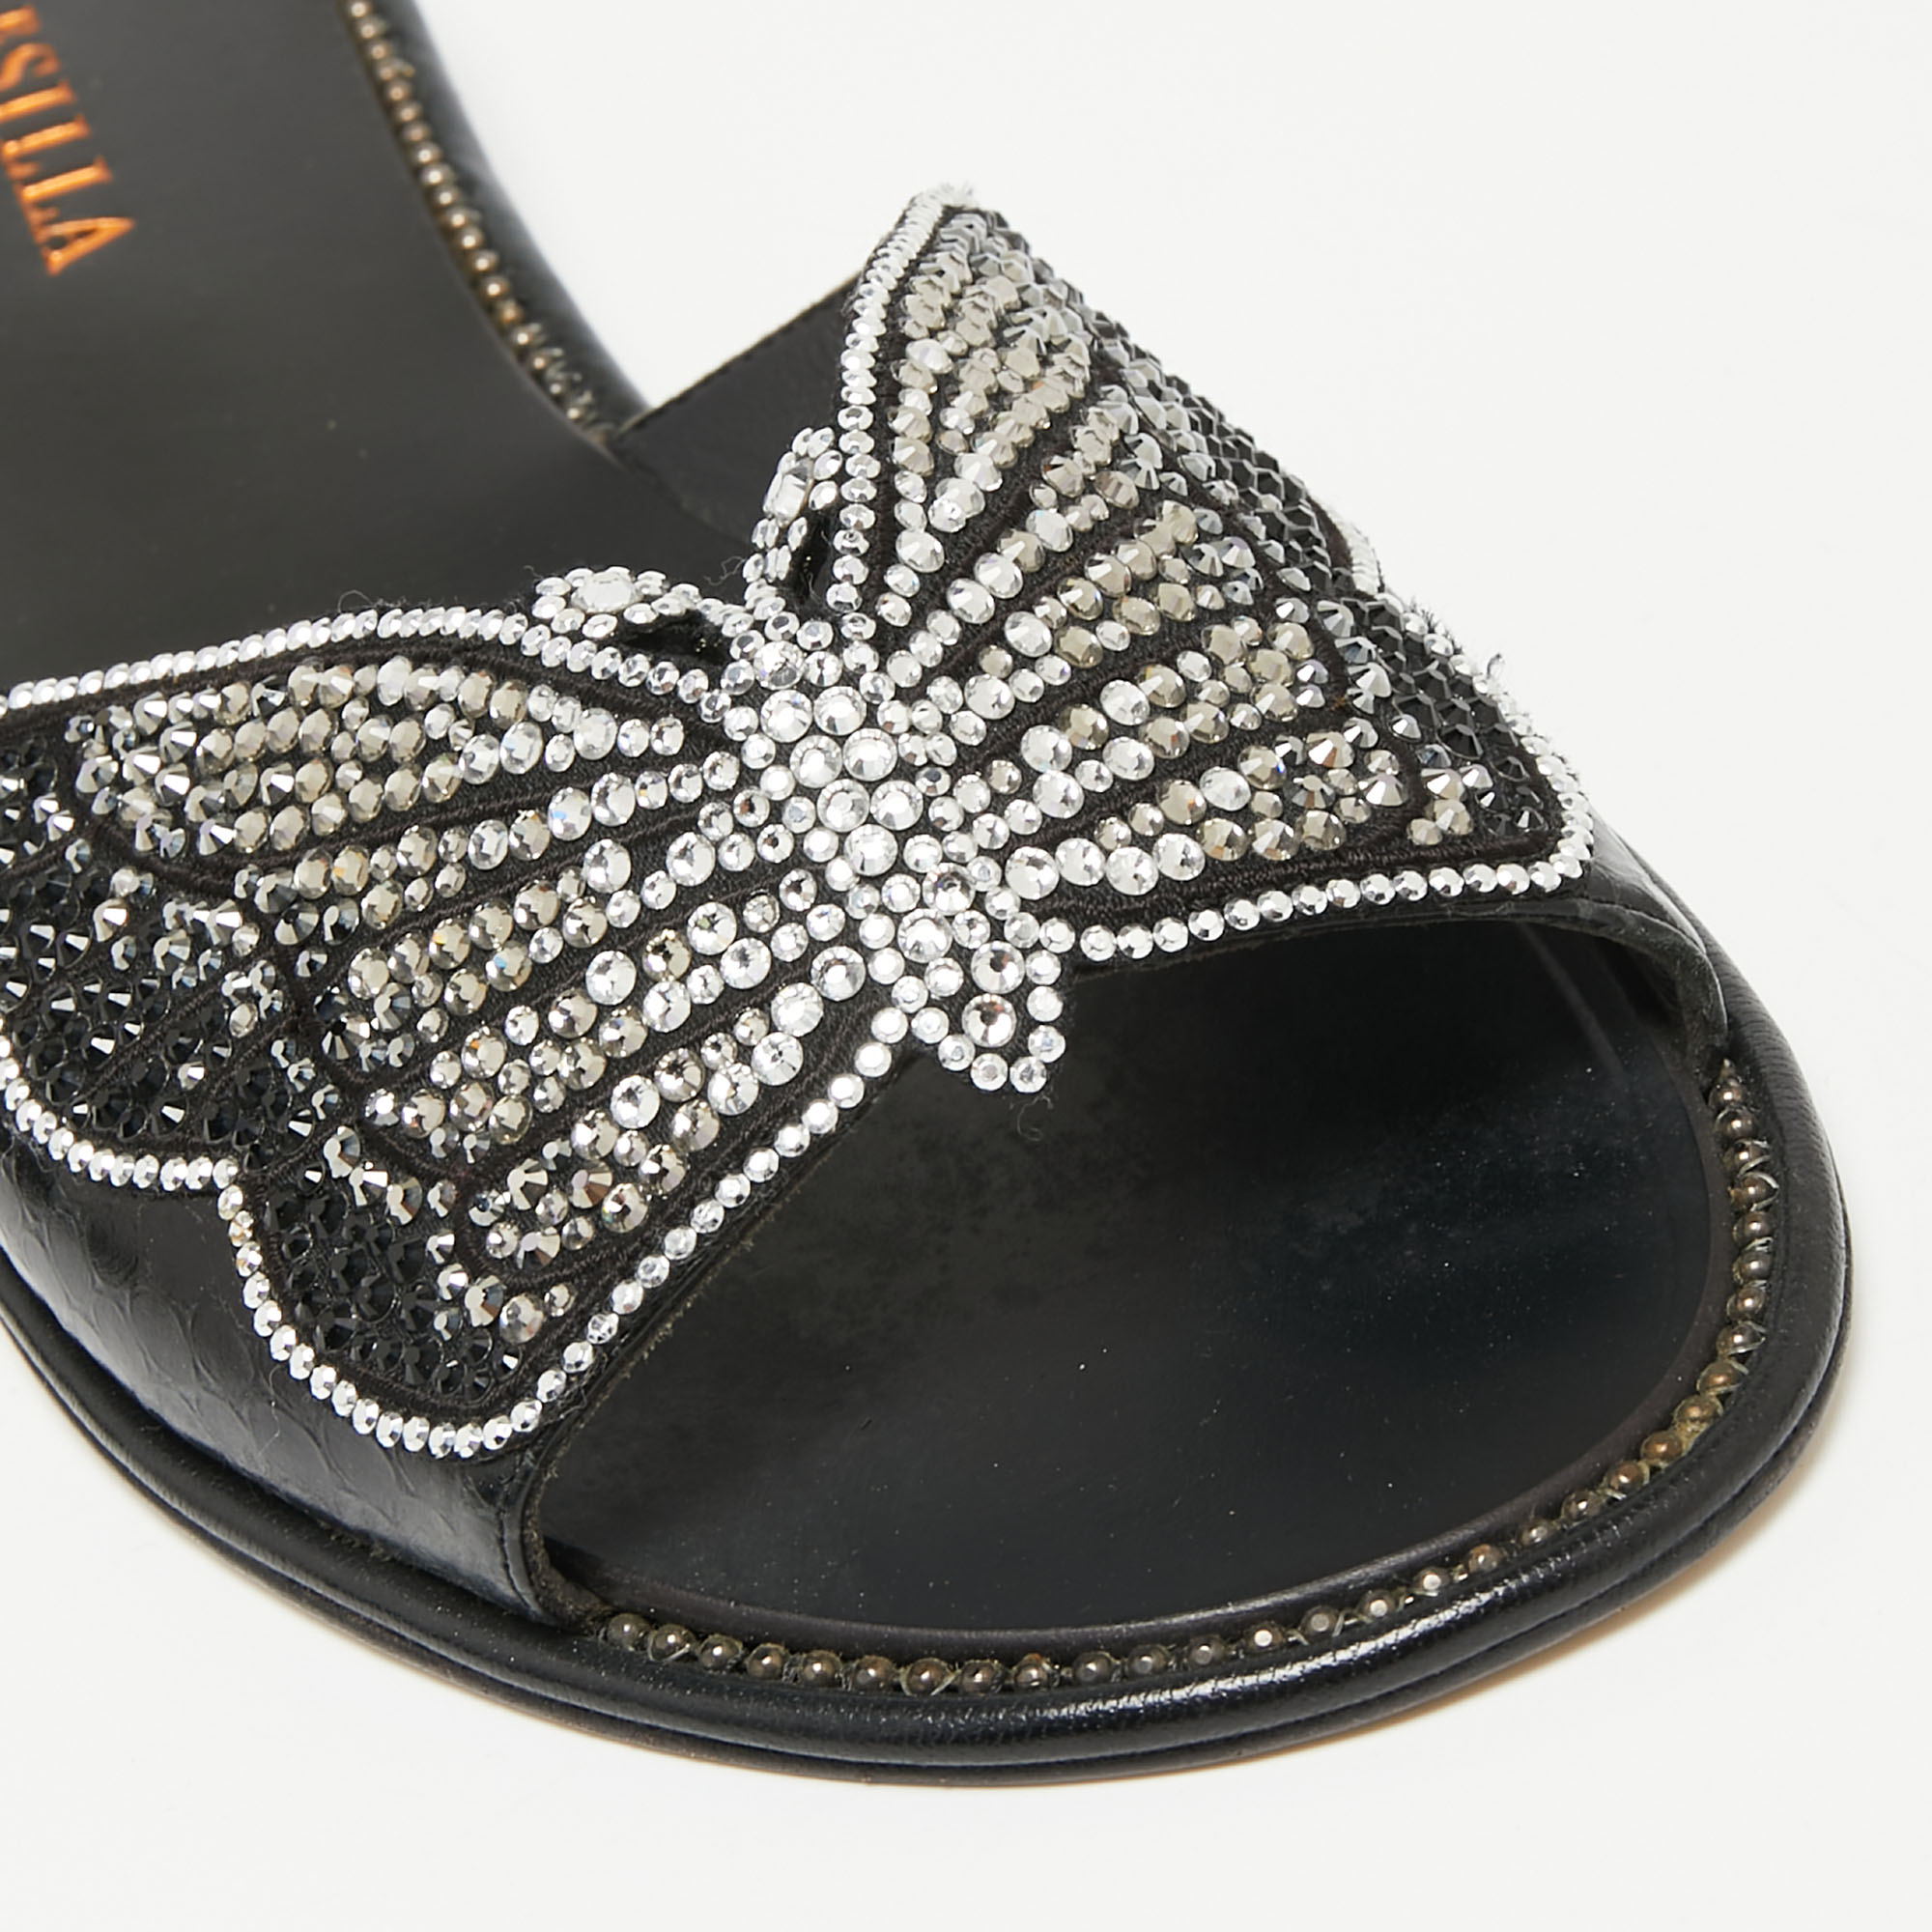 Le Silla Black Snakeskin Embossed And Leather Butterfly Embellished Slide Sandals Size 37